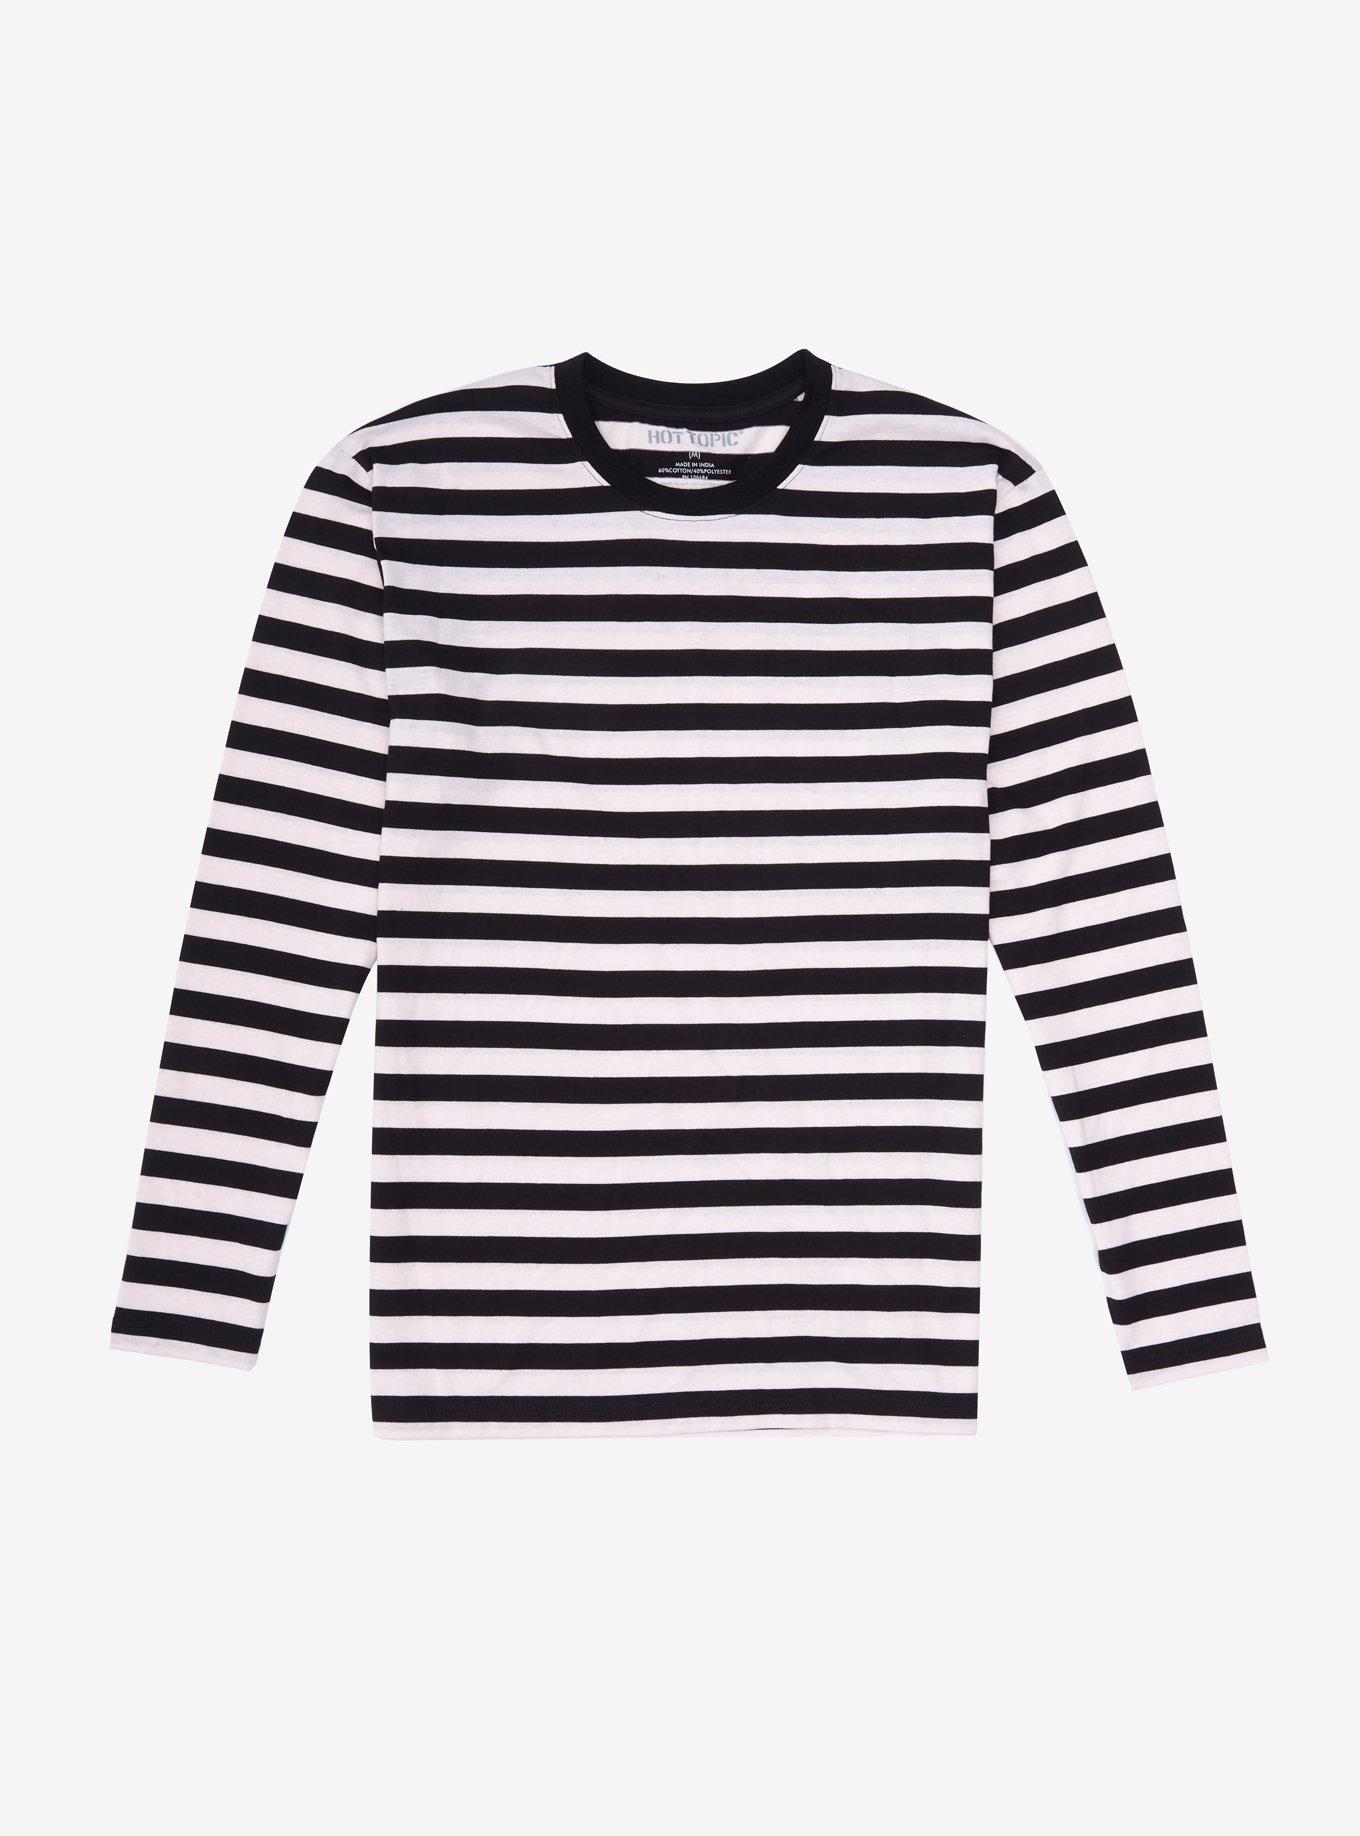 Pastel Pink & Black Stripe Long-Sleeve T-Shirt, STRIPE - MULTI, hi-res